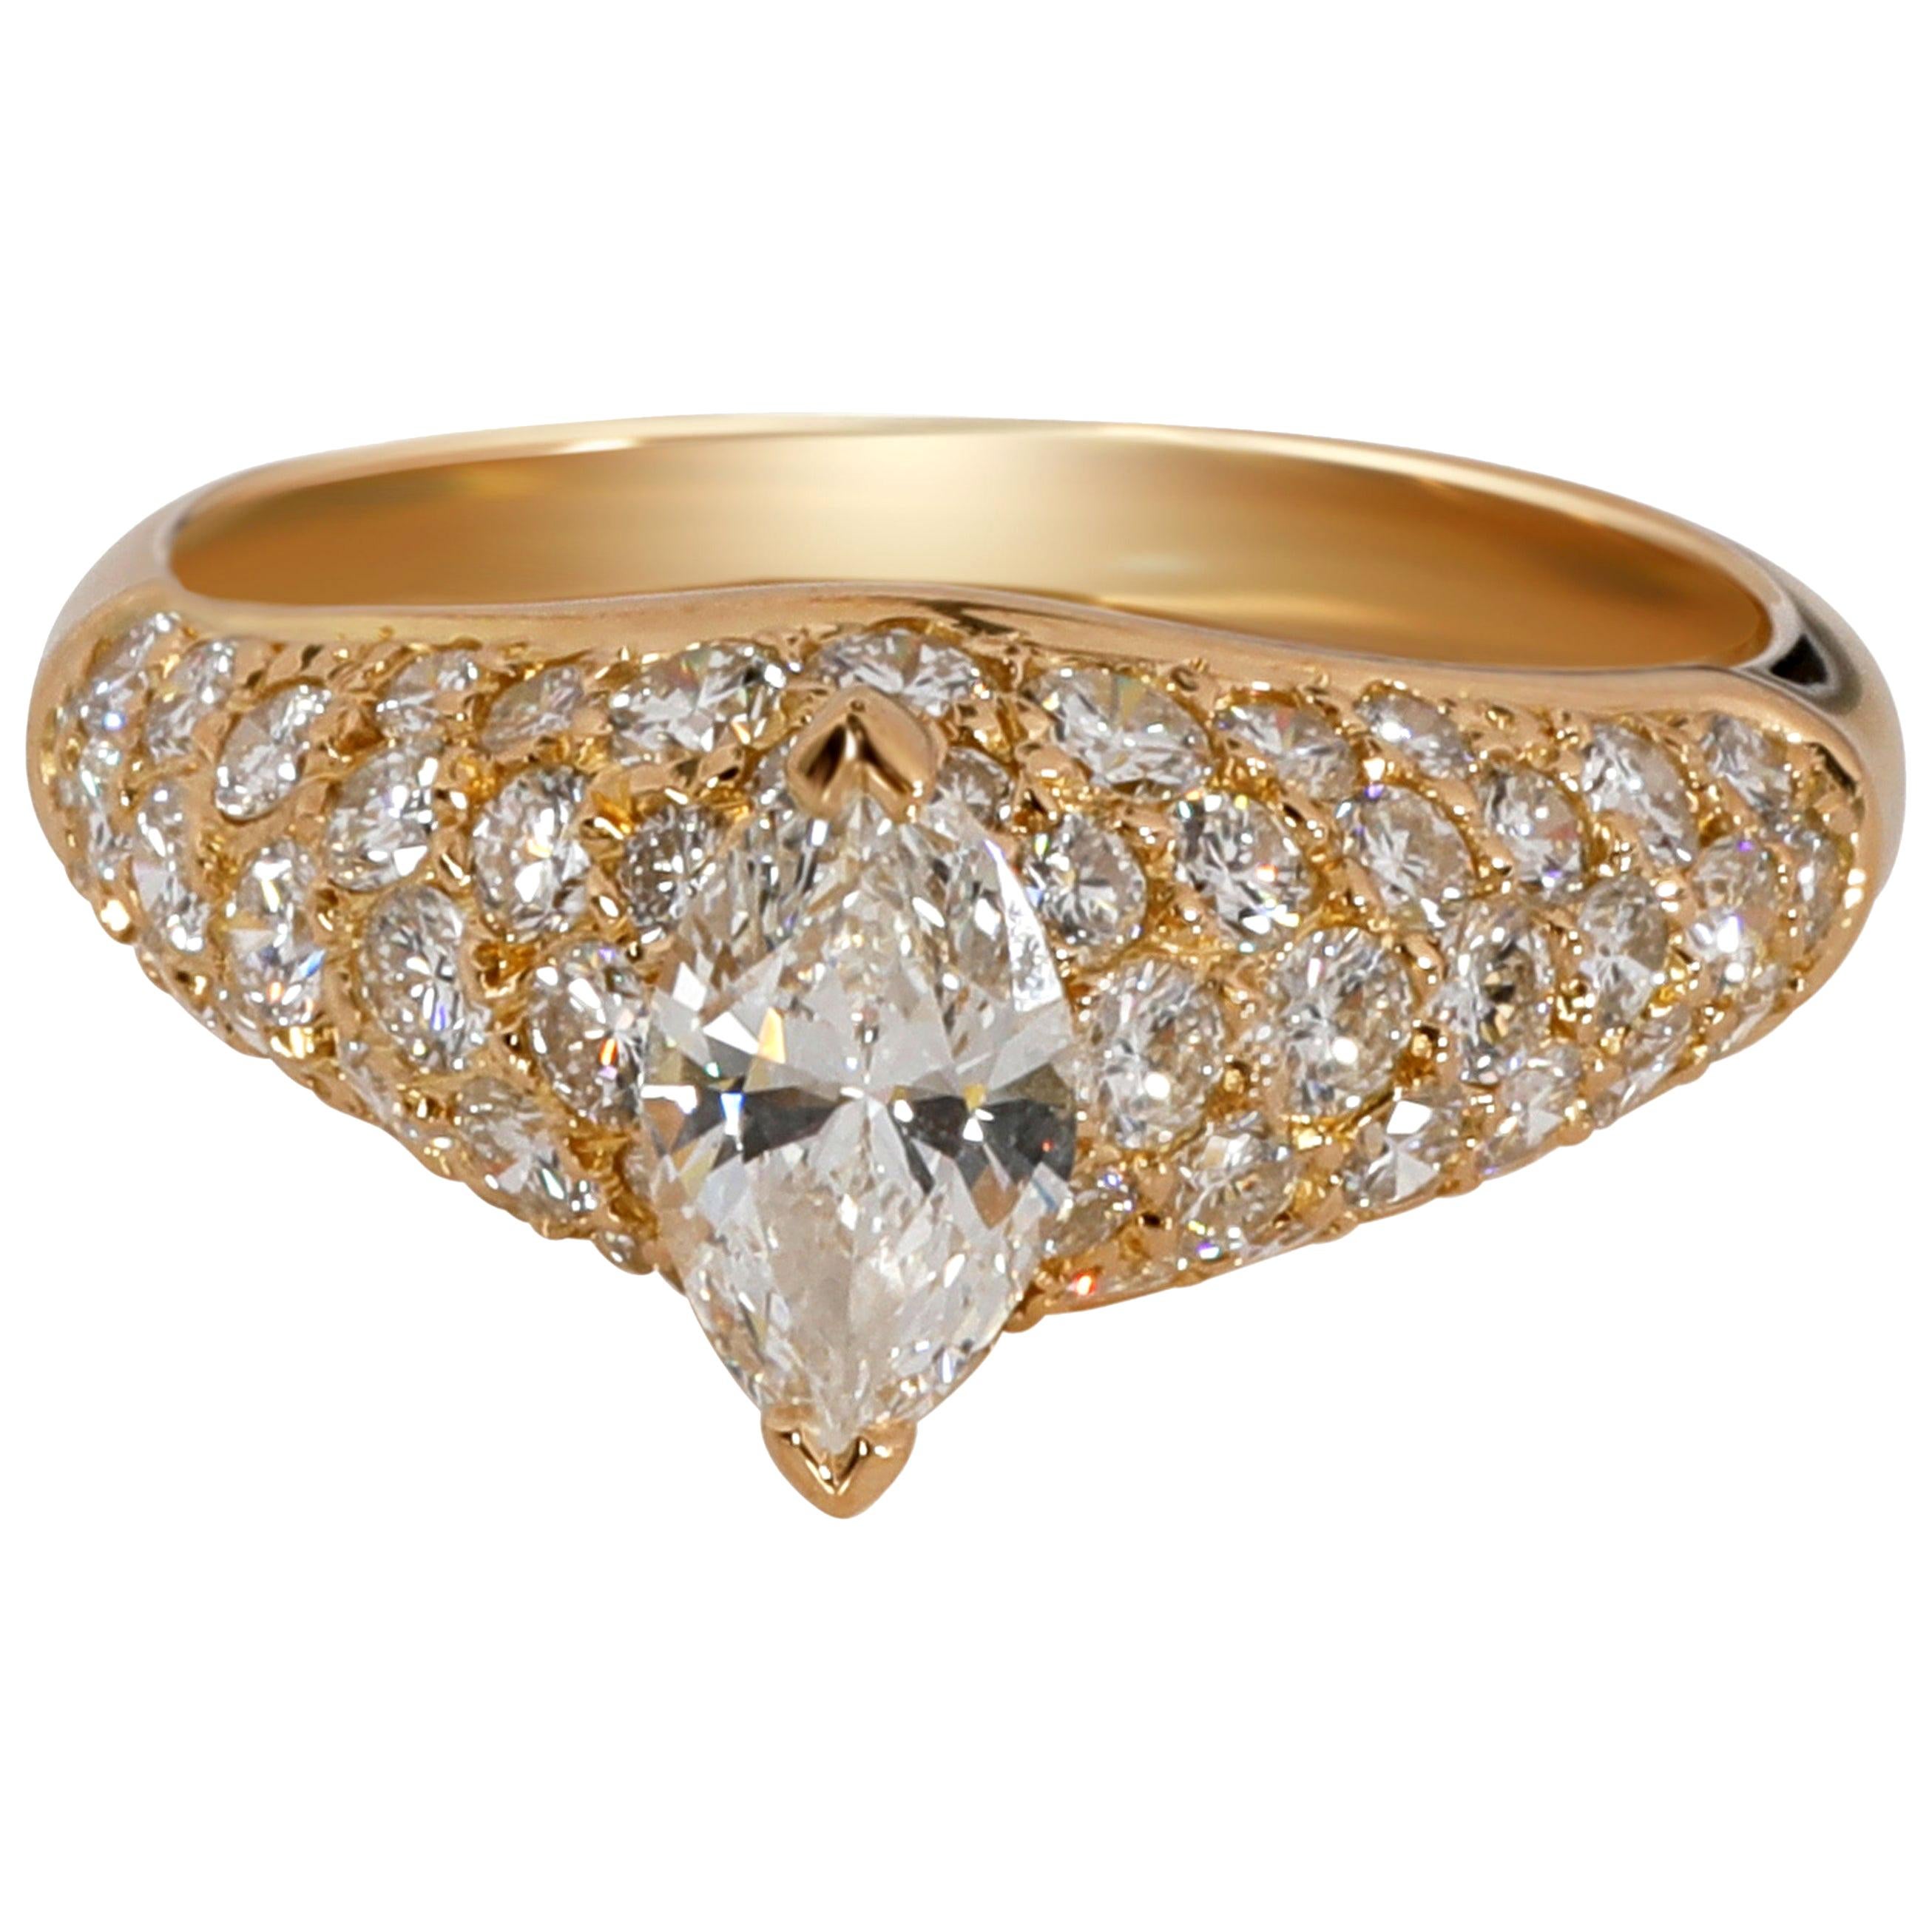 Cartier Pave Marquise Diamond Engagement Ring in 18 Karat Yellow Gold 1.9 Carat